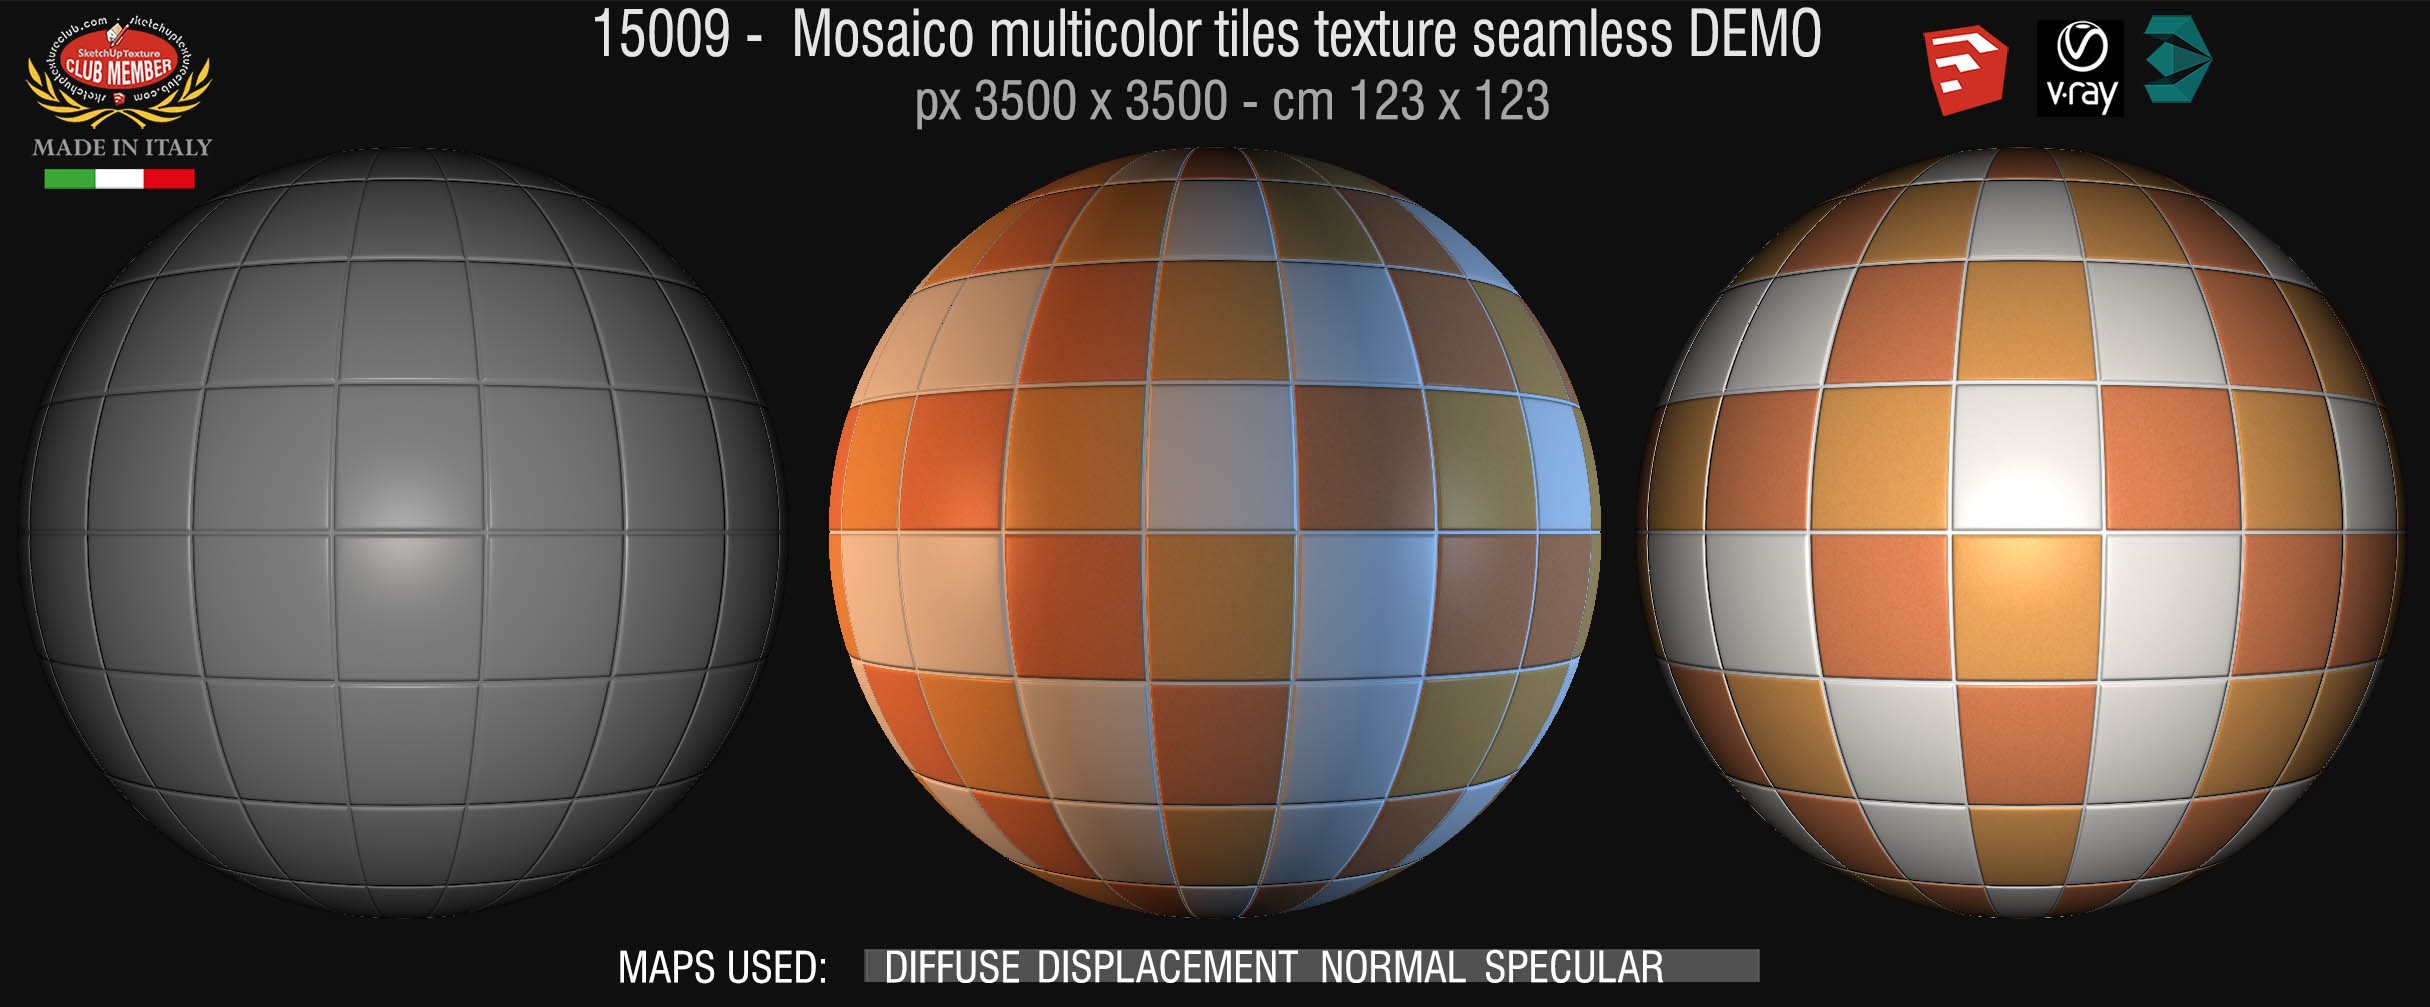 15009 Mosaico multicolor tiles texture seamless + maps DEMO